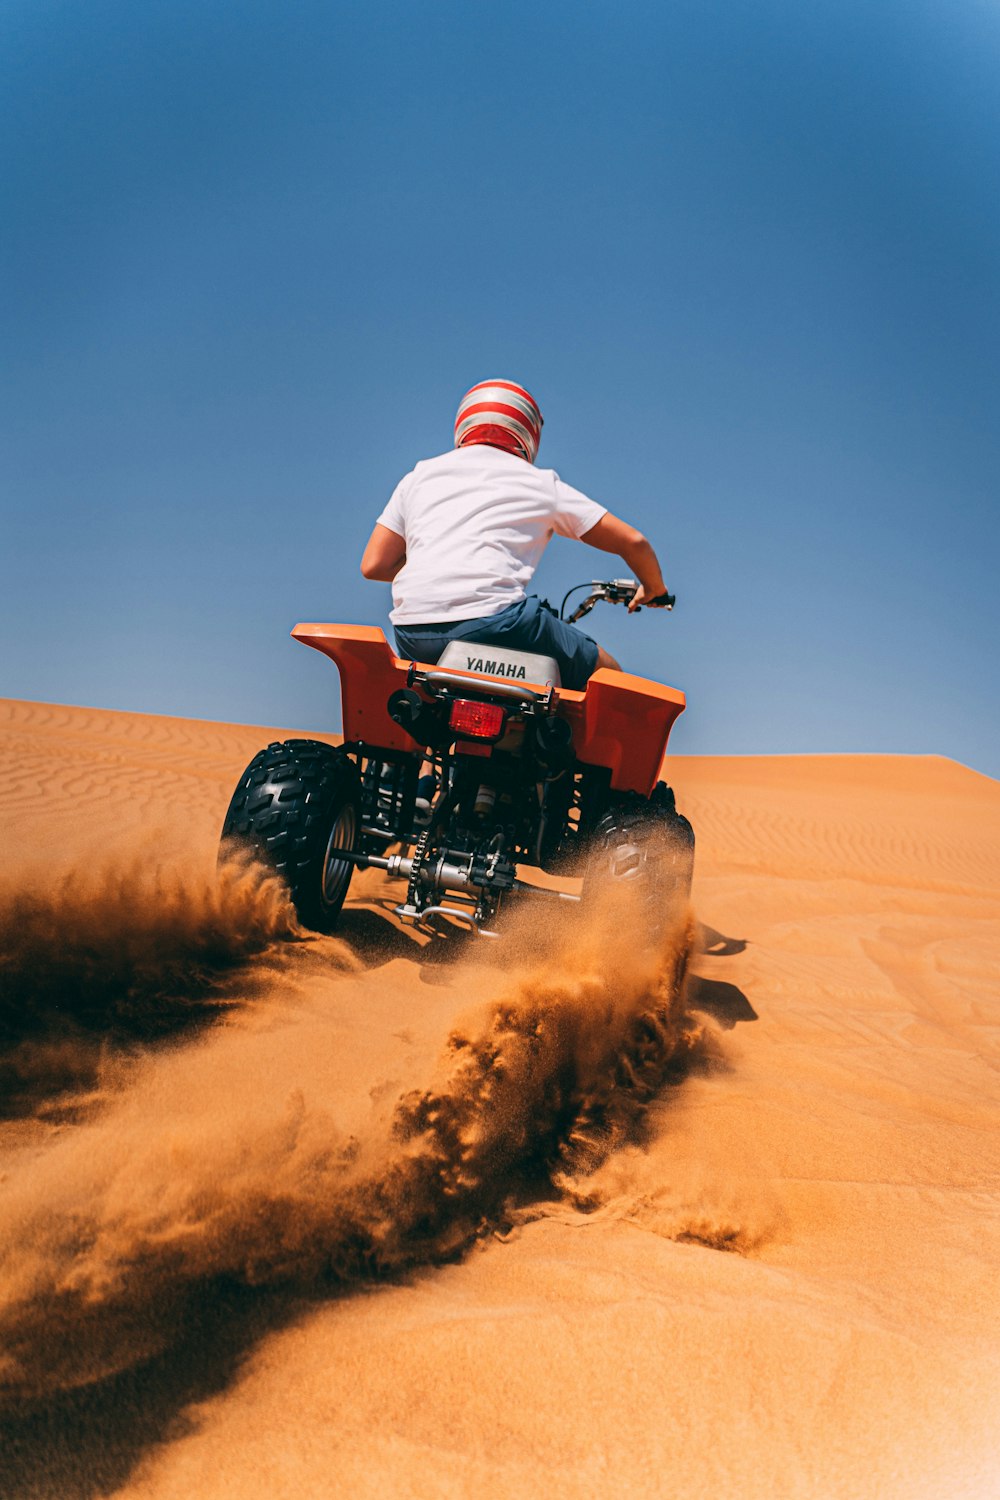 person riding ATV on desert during daytime